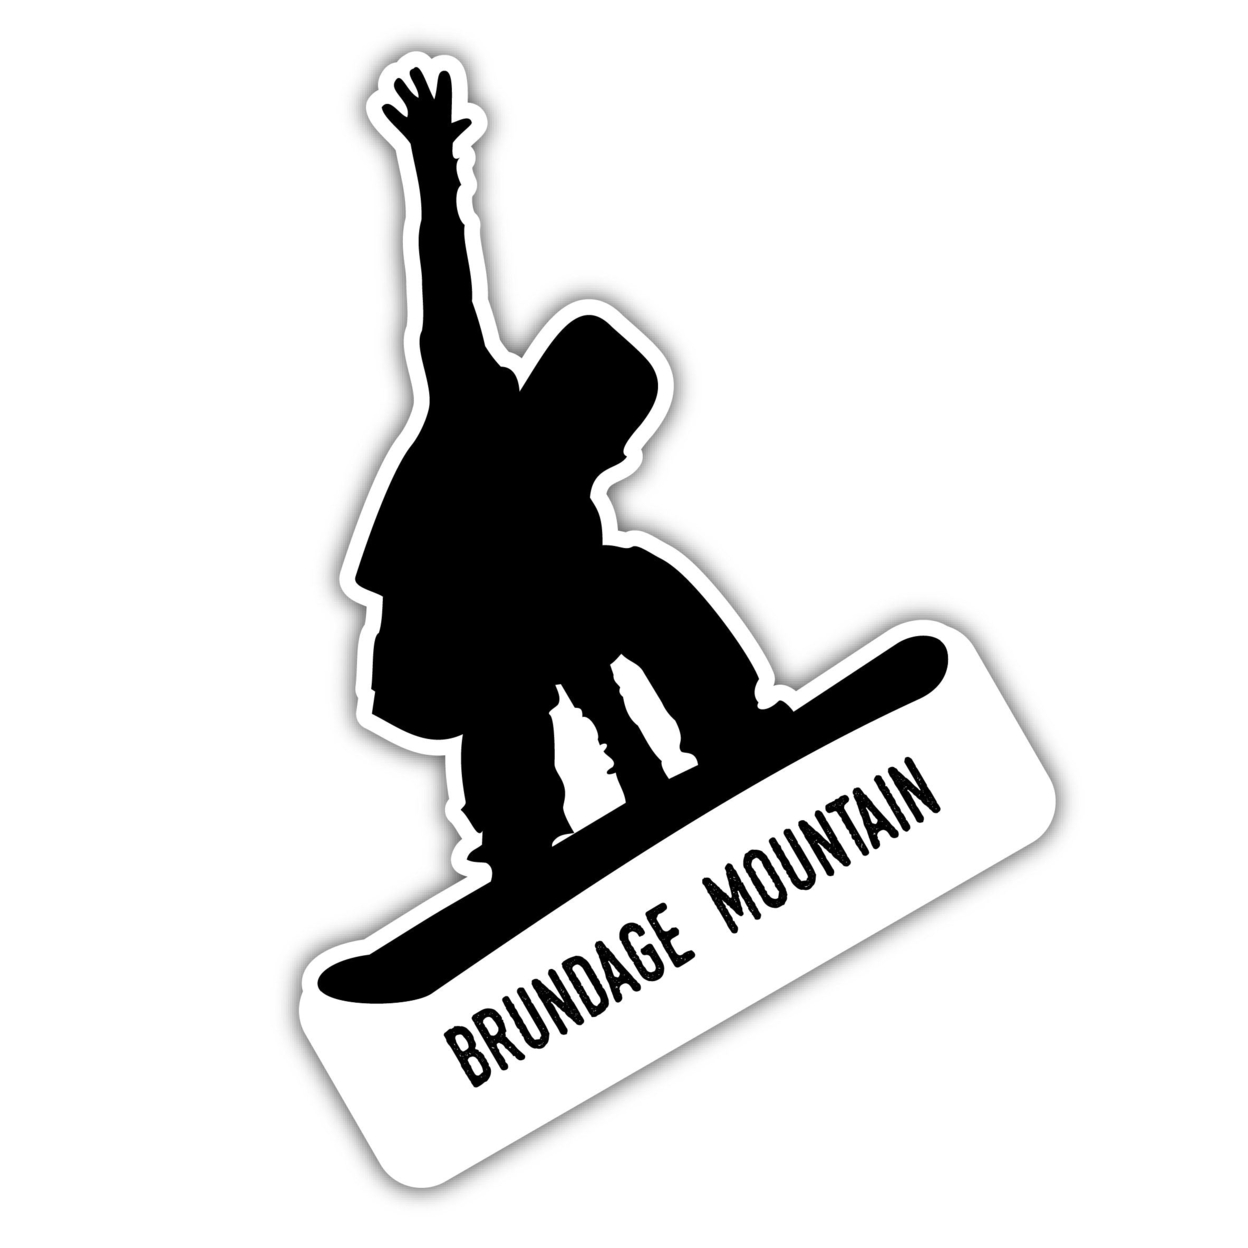 Brundage Mountain Idaho Ski Adventures Souvenir 4 Inch Vinyl Decal Sticker Mountain Design